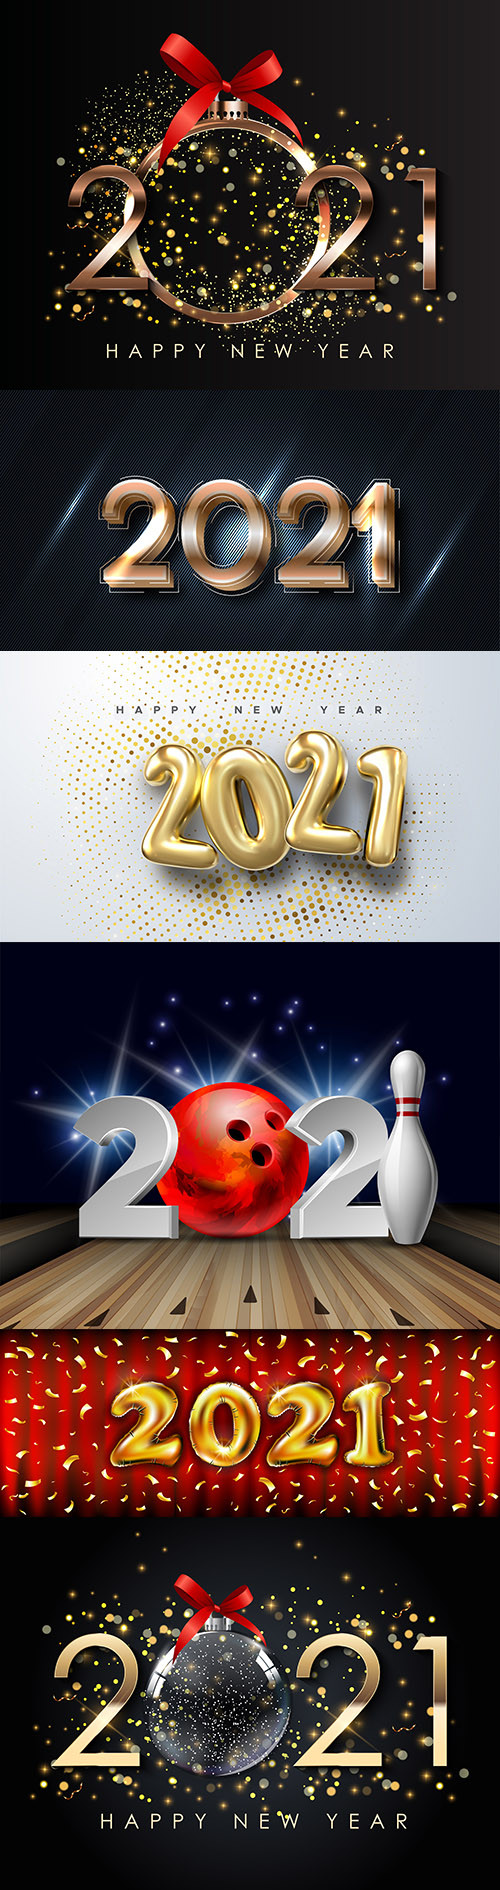 2021 New Year's illustrations Festive design inscription
